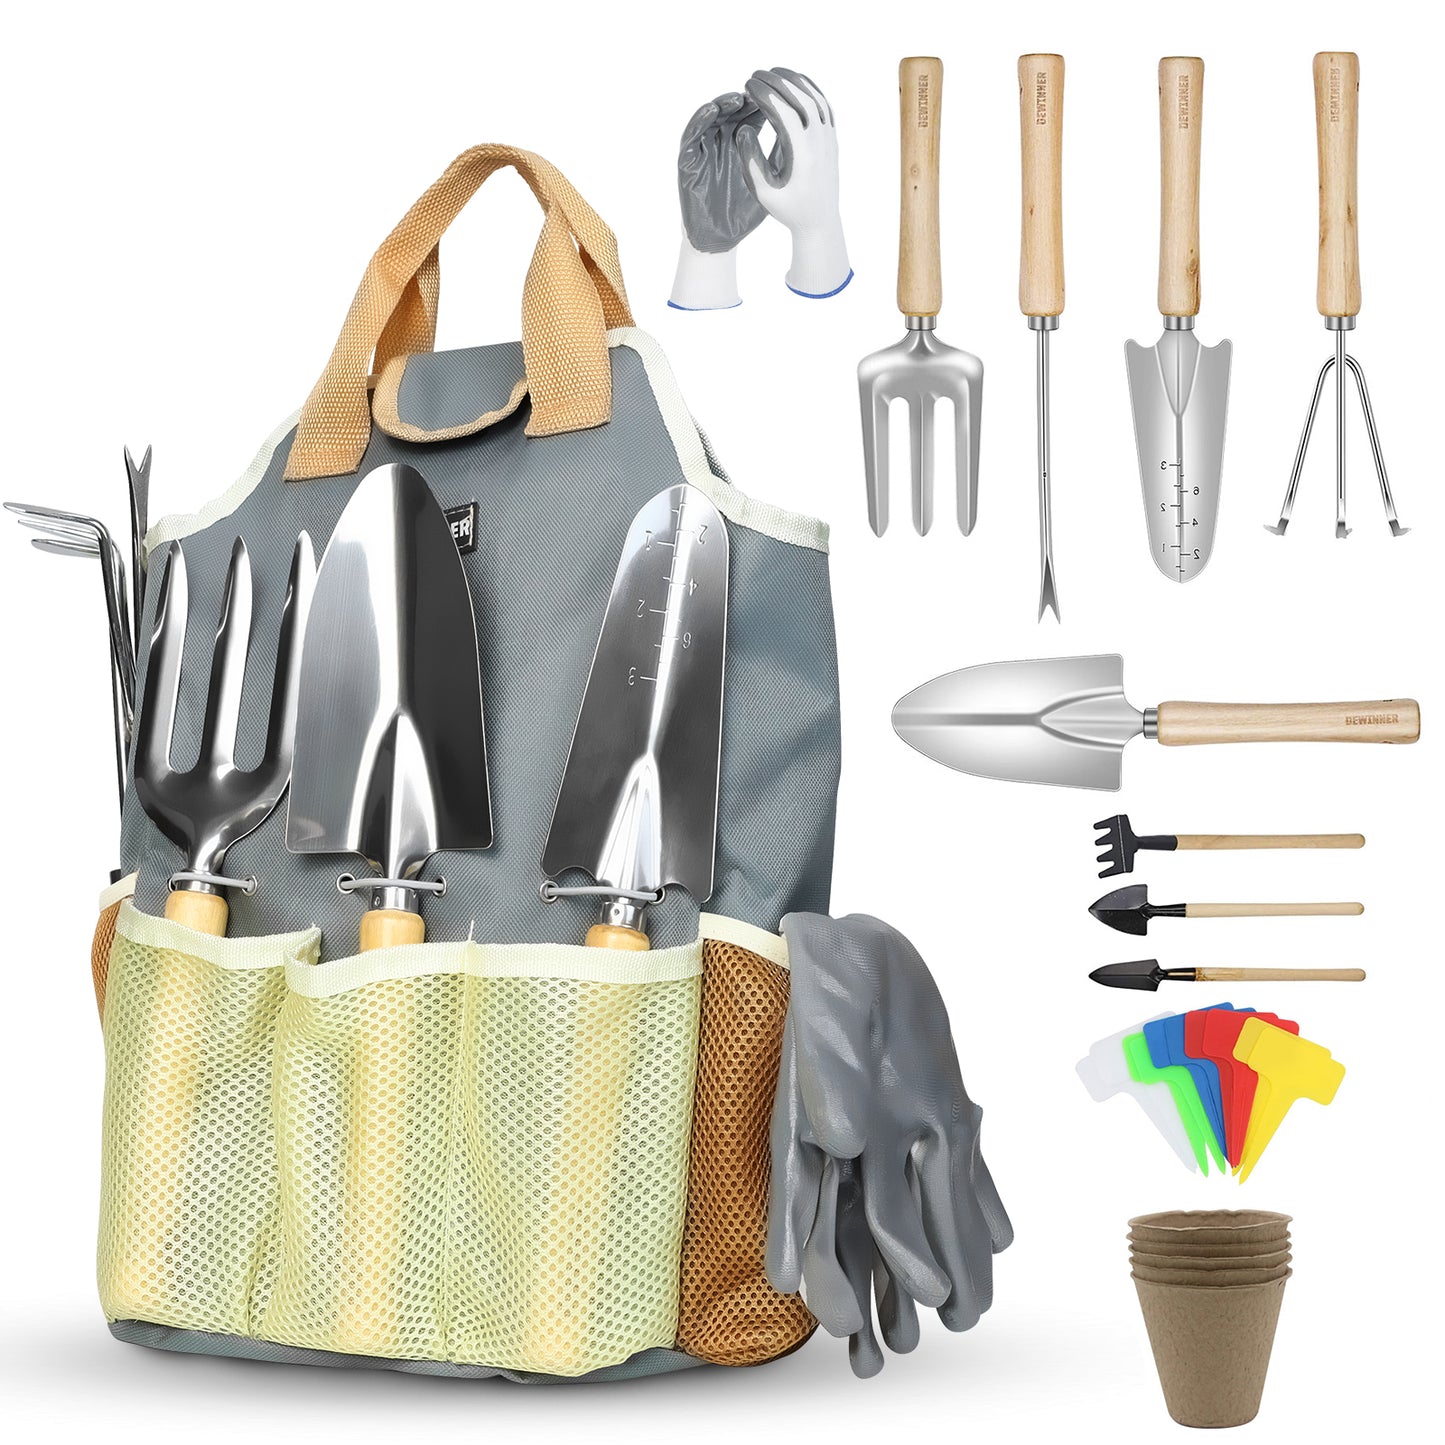 DEWINNER Garden Tool Set, Hand Tool Gift Kit, Outdoor Gardening transplanting for Gardener, with heavy duty hold bag for storage